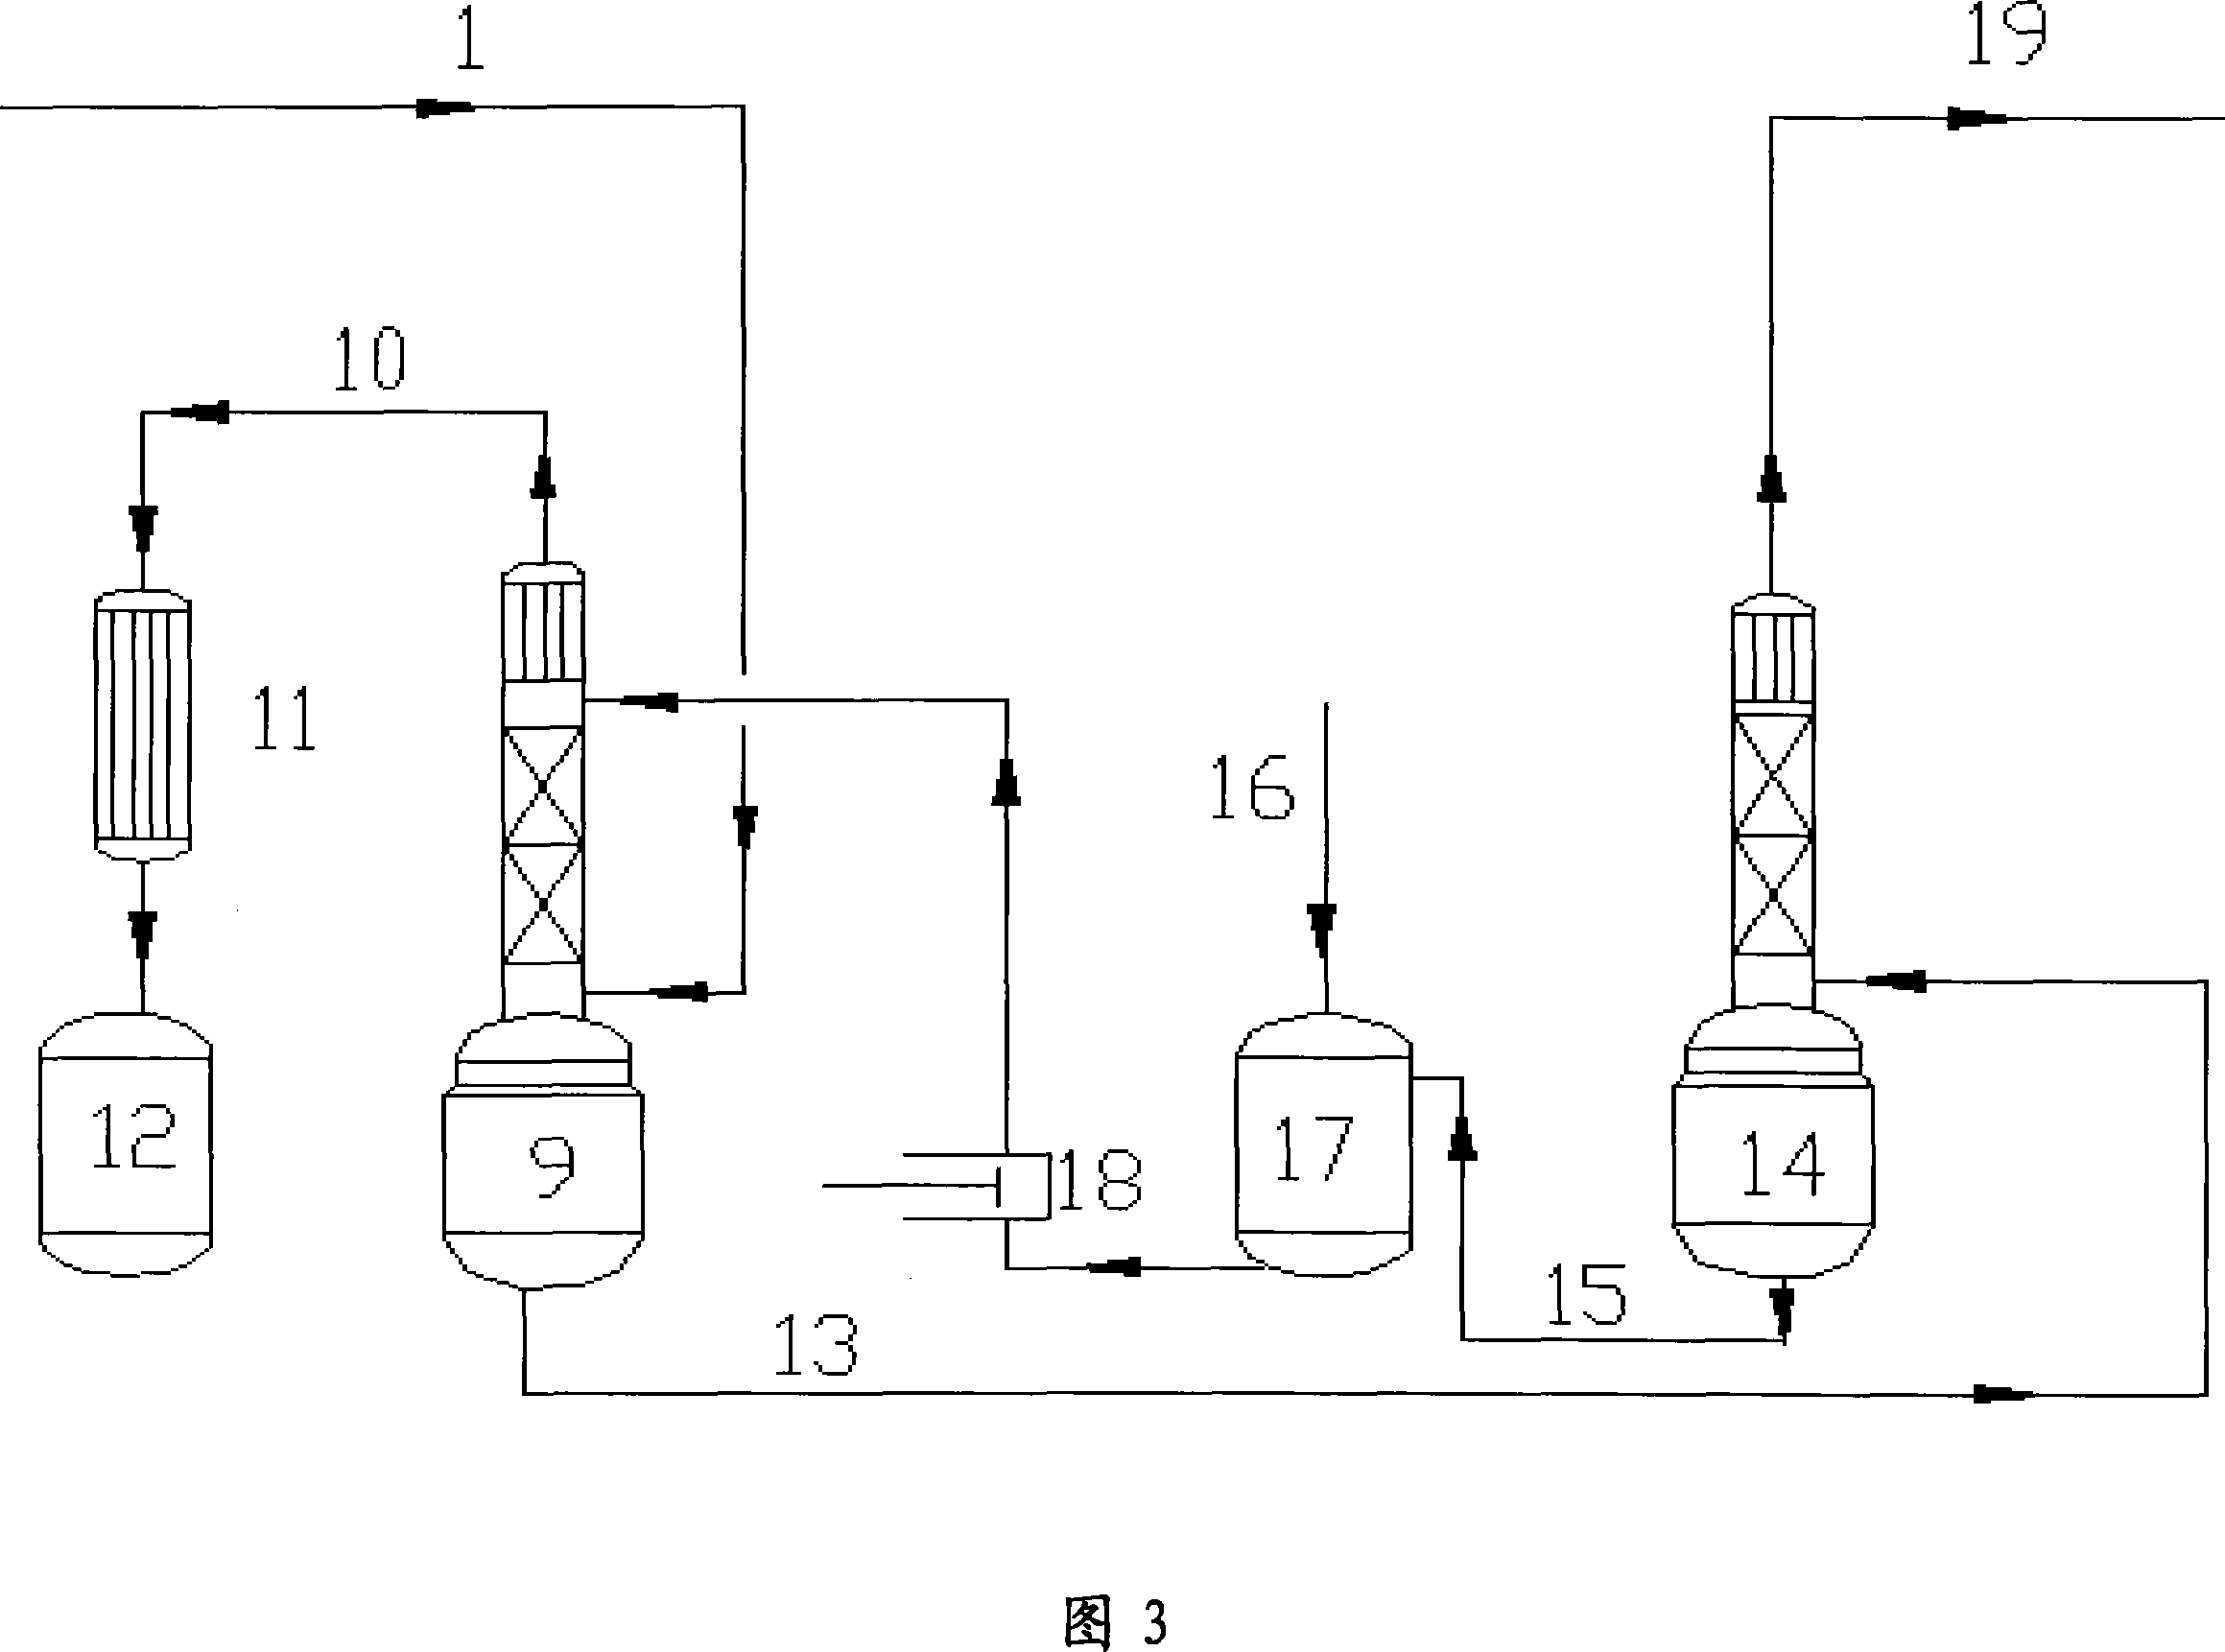 Freon 22/hexafluoropropylene azeotrope separating and recovering method